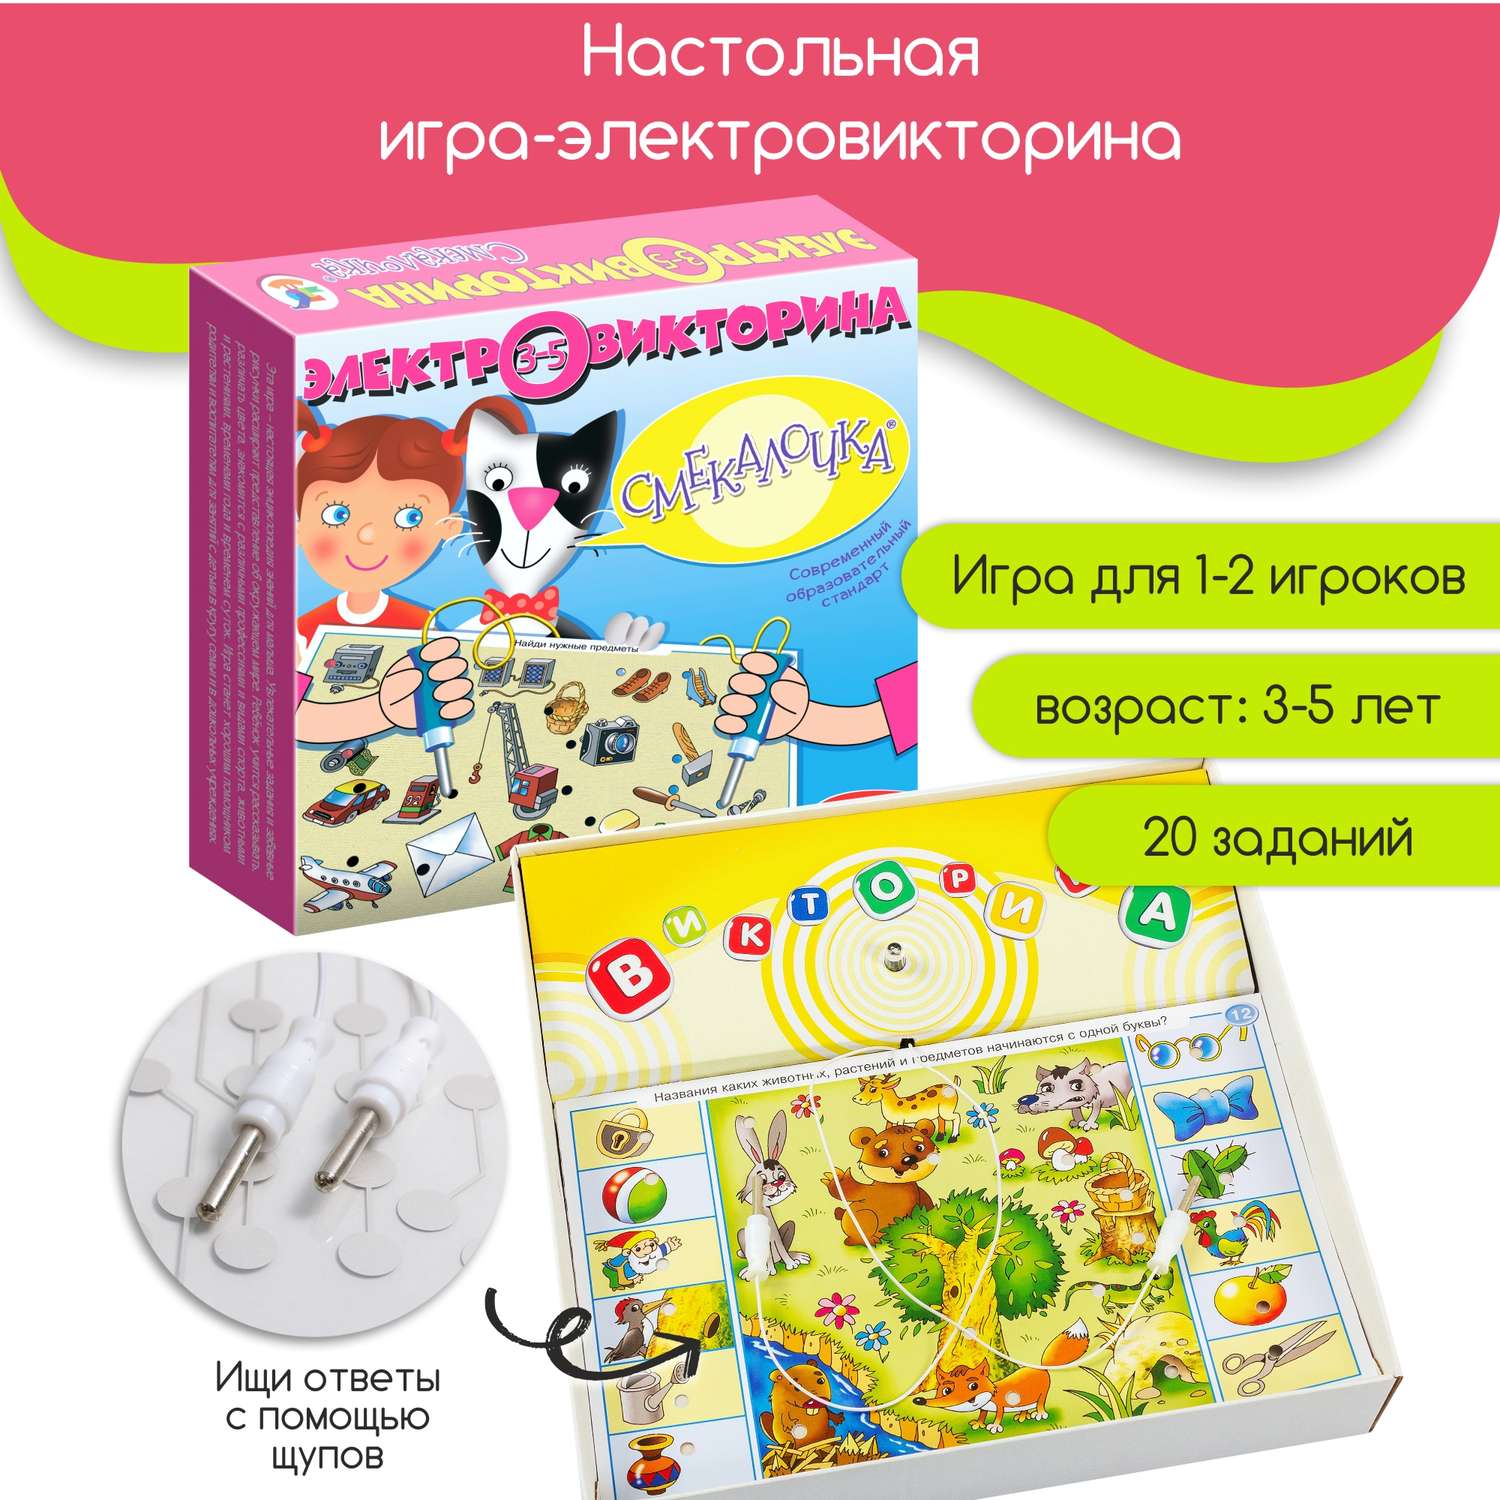 Электровикторина для детей Дрофа-Медиа Смекалочка 1031 - фото 2